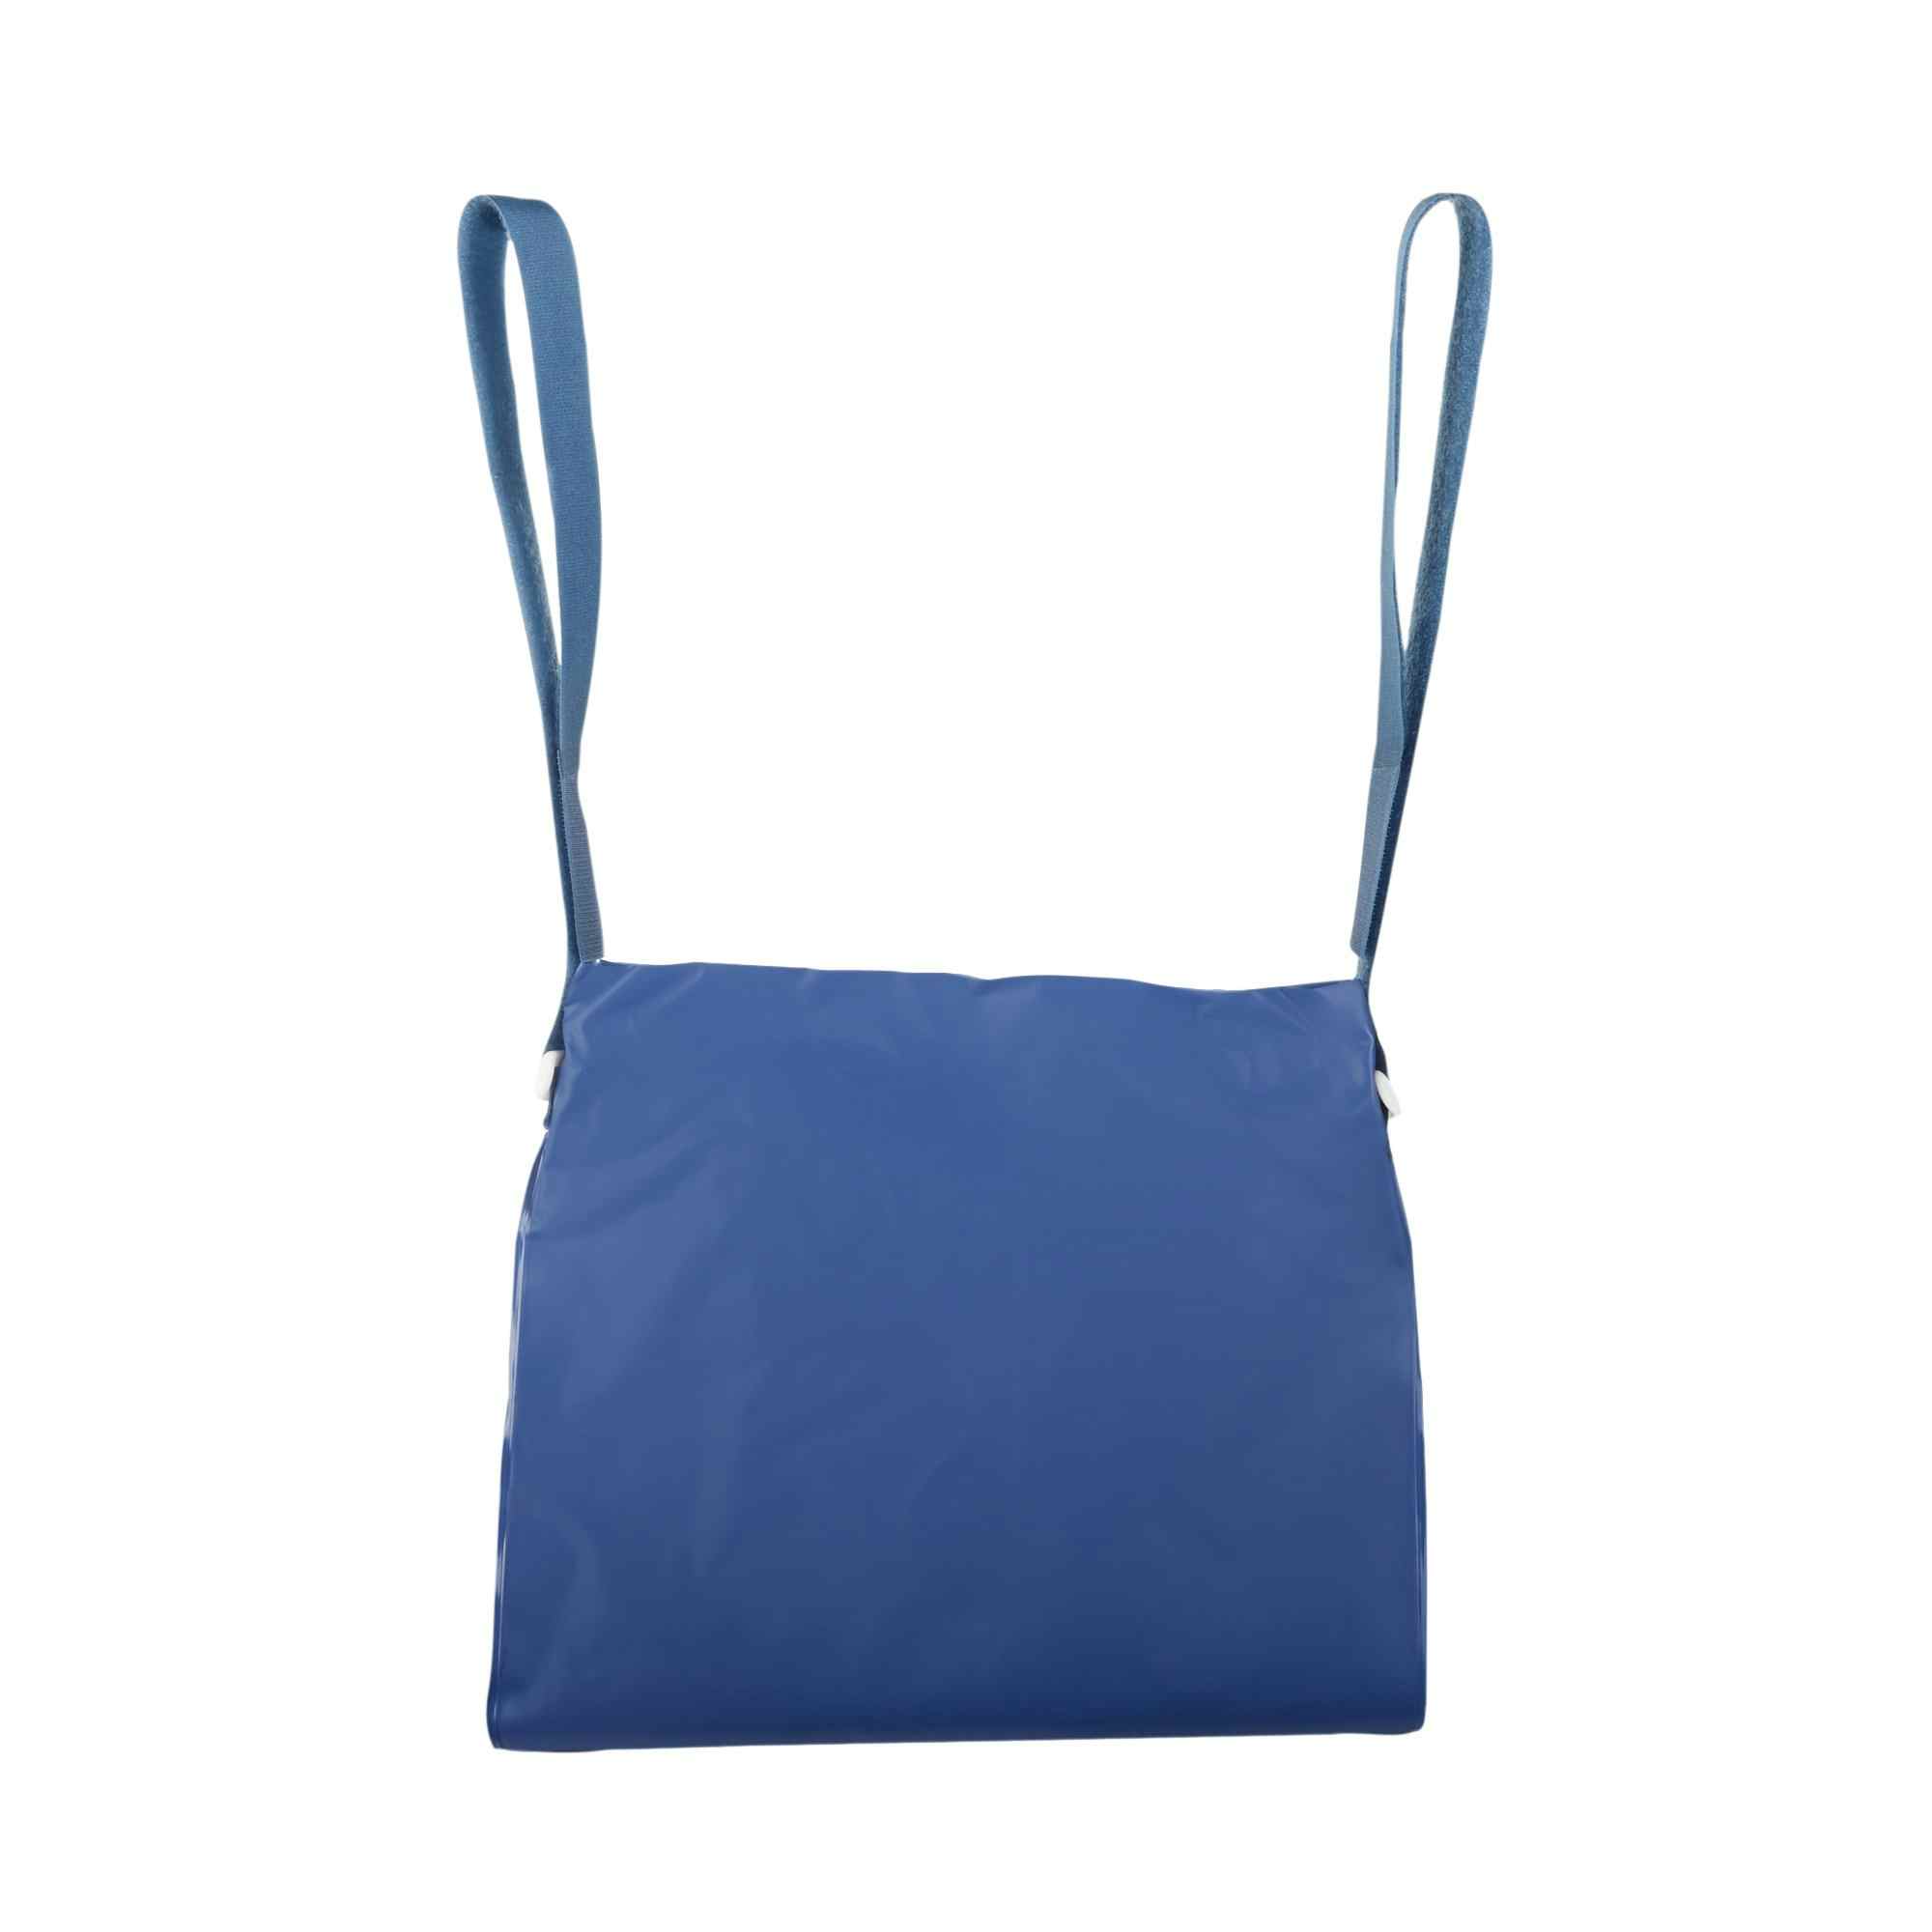 McKesson Urinary Bag Drainage Holder, Adjustable Straps, Navy Blue